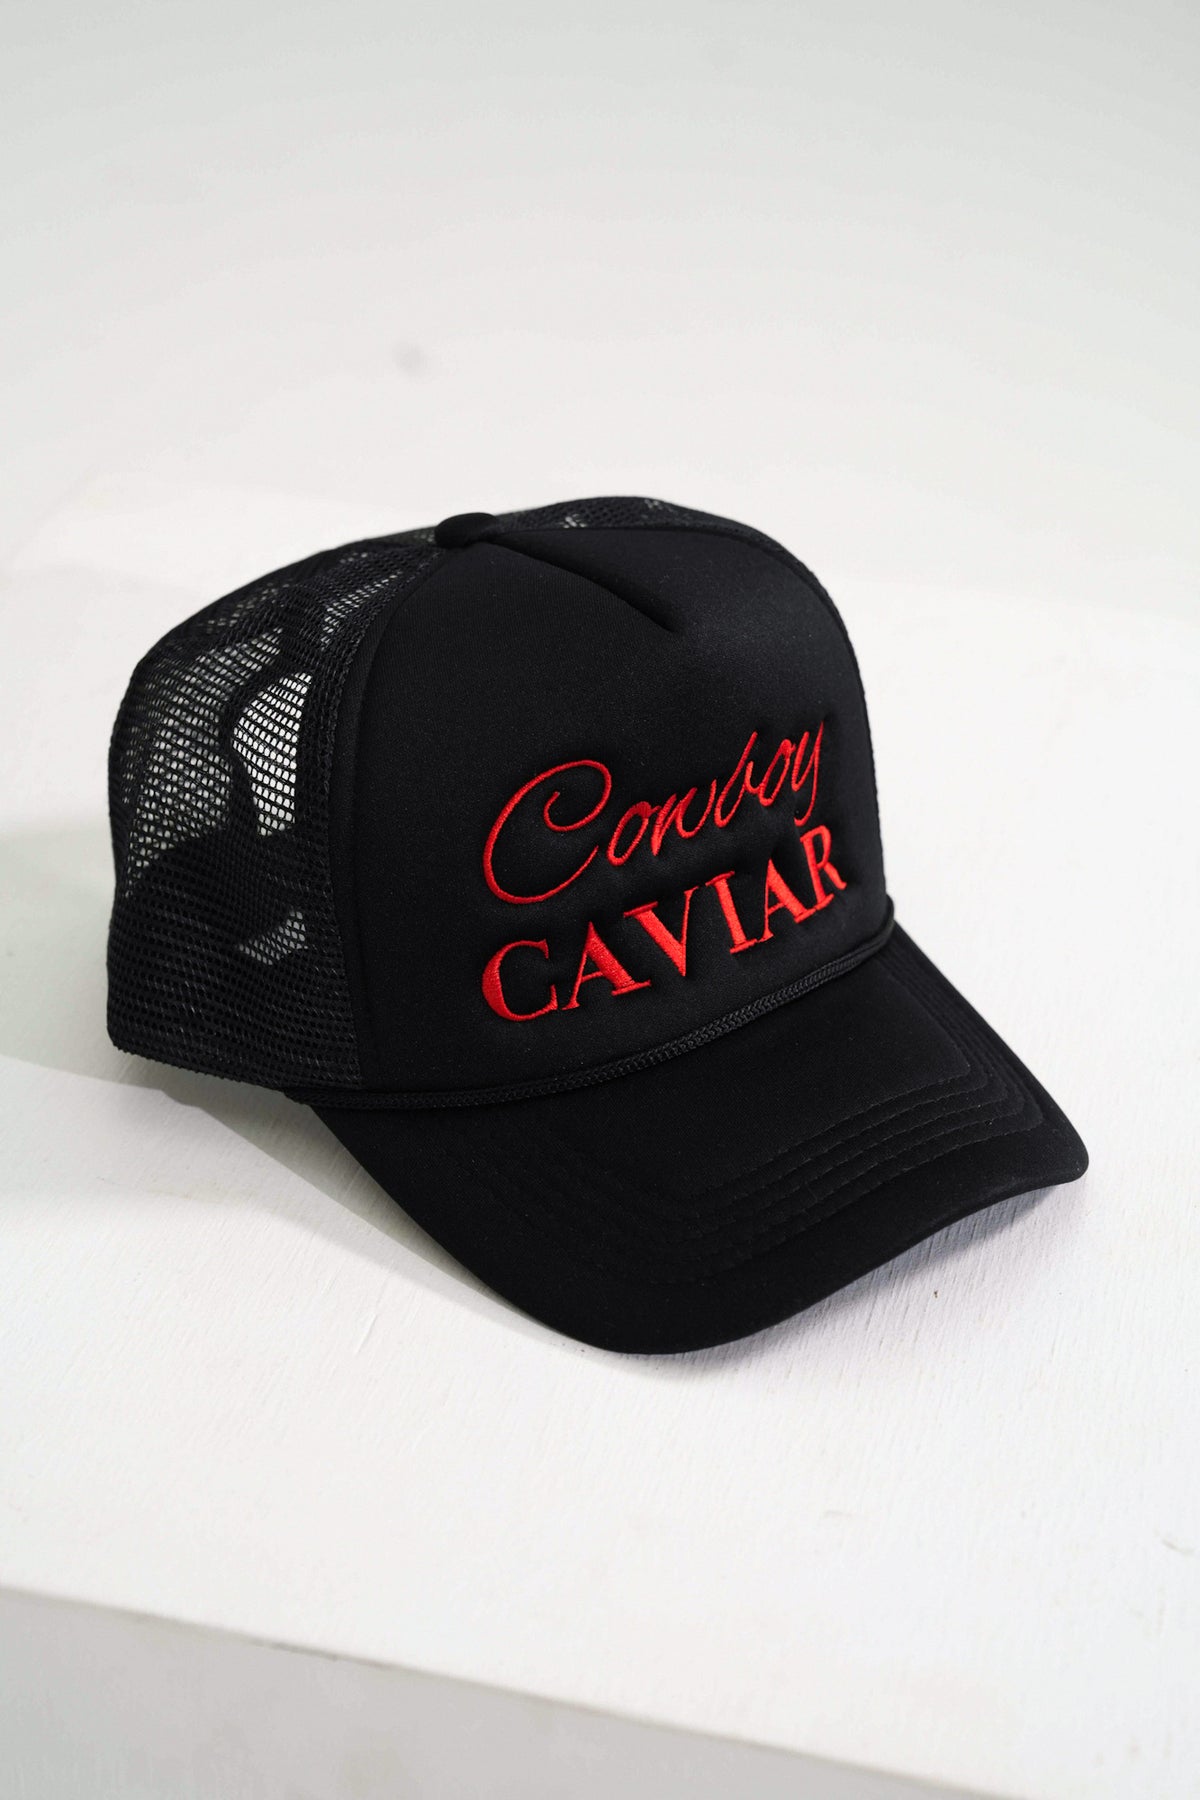 Cowboy Caviar Trucker Hat